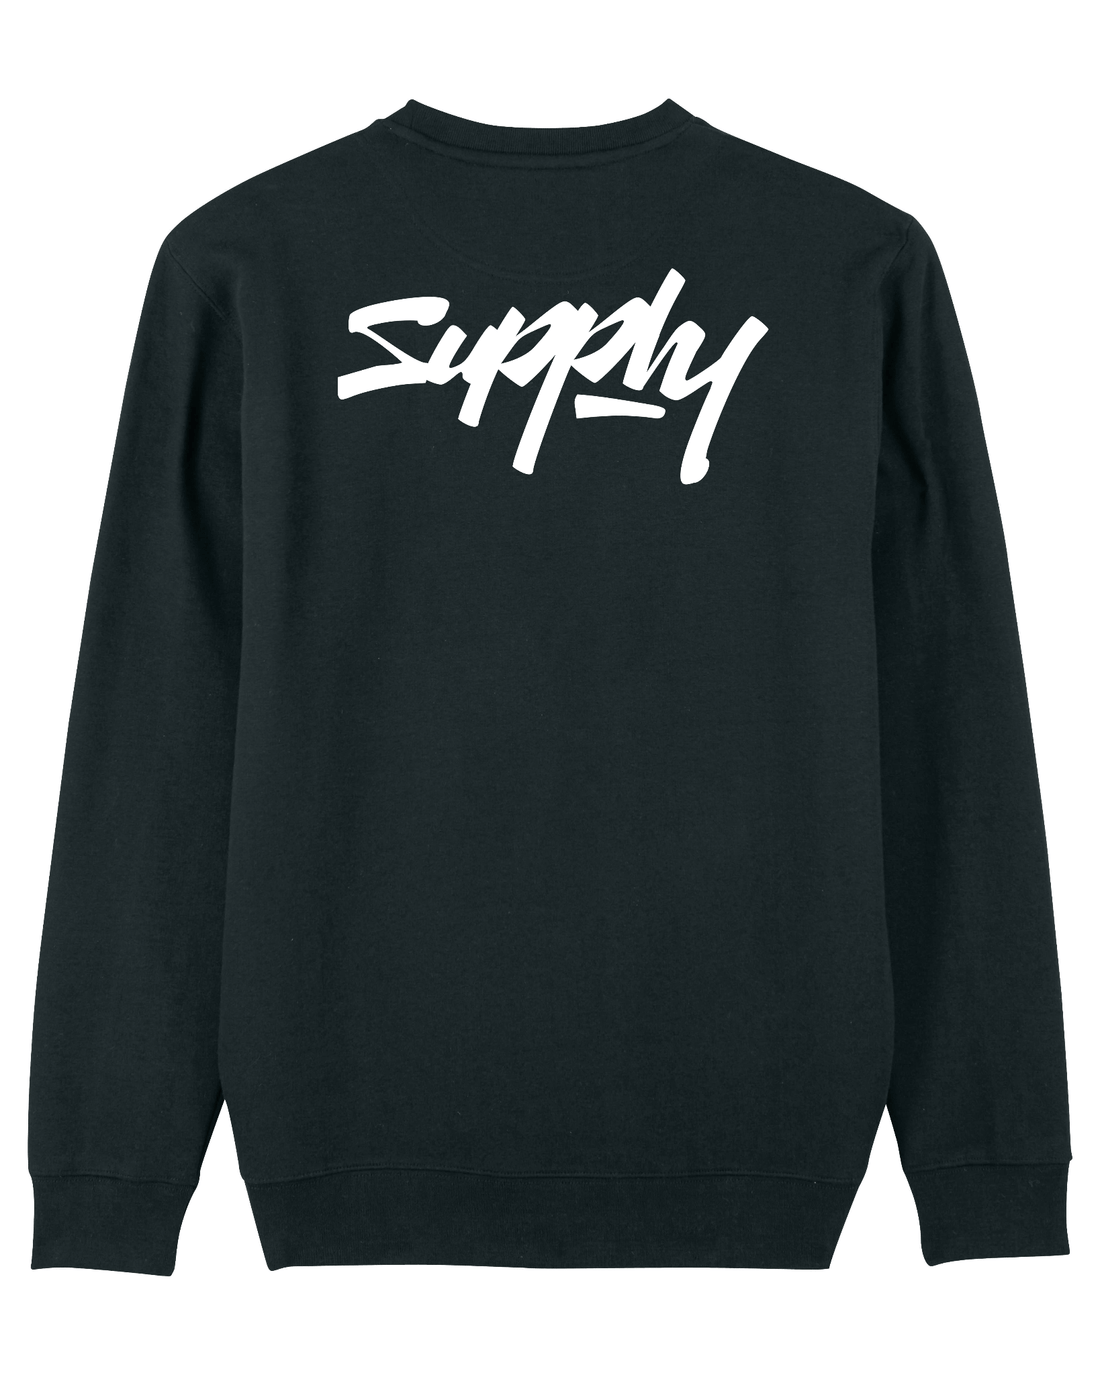 Black Skater Sweatshirt, Supply V2 Back Print